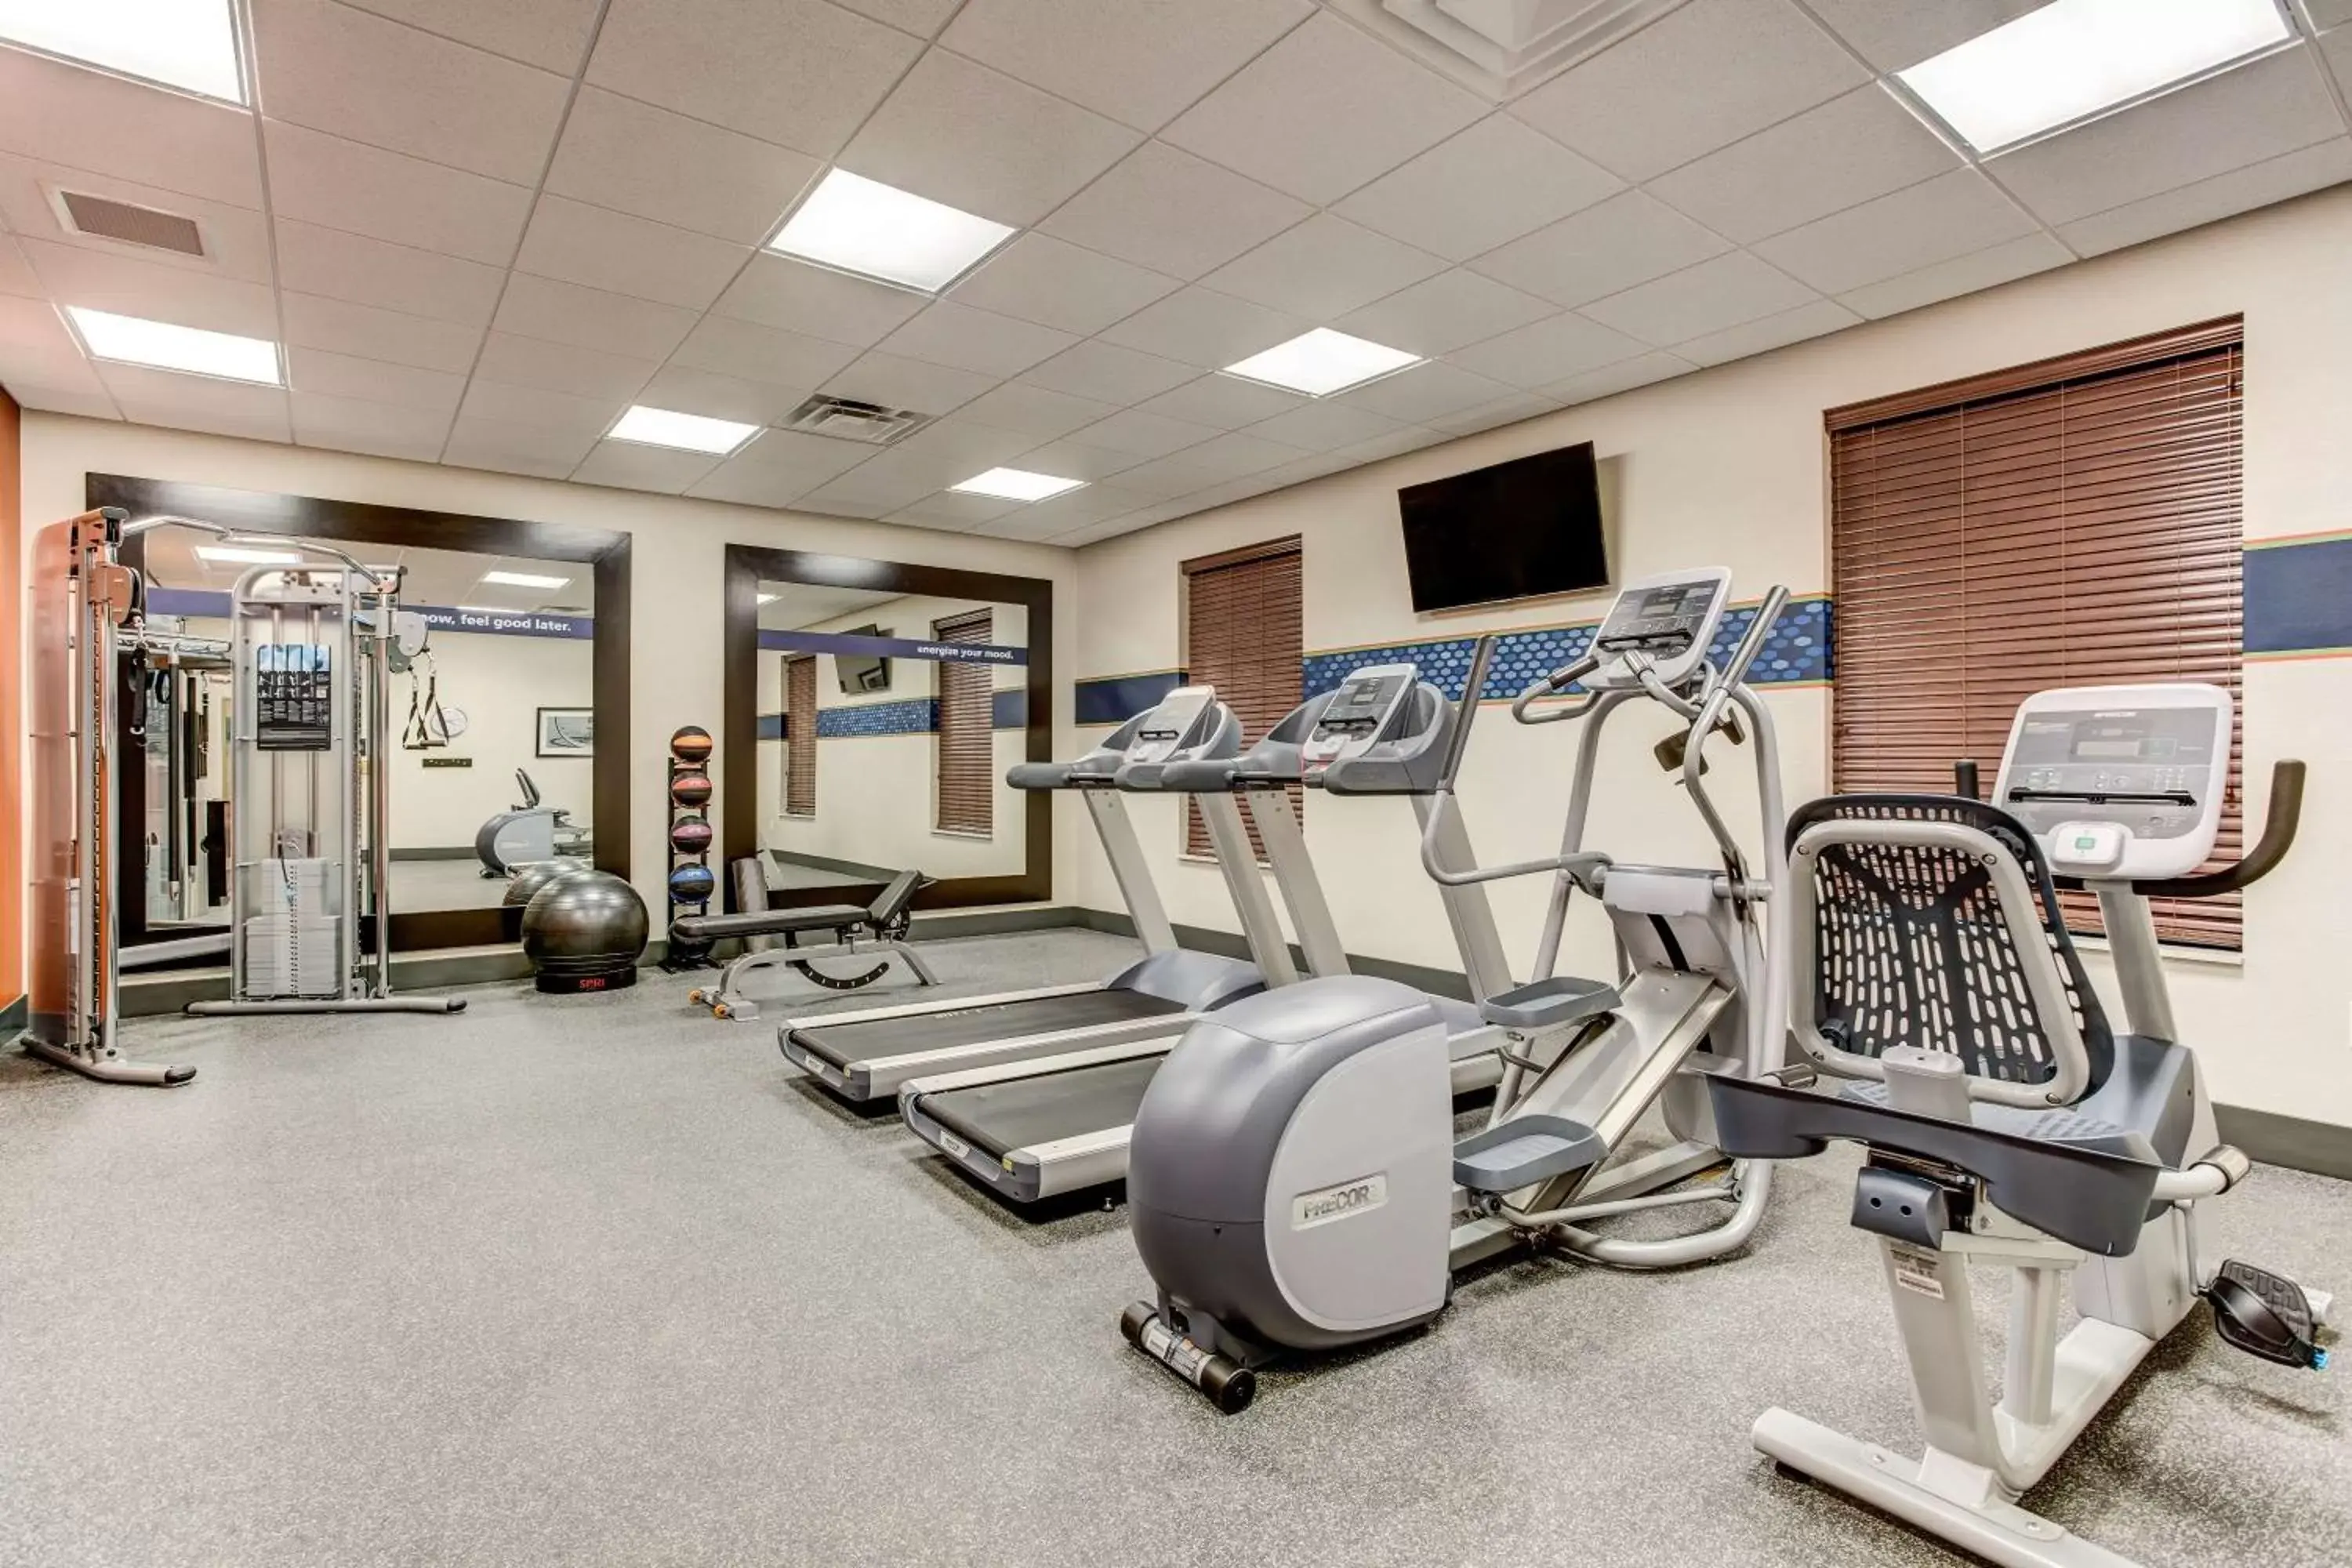 Fitness centre/facilities, Fitness Center/Facilities in Hampton Inn & Suites Manchester, TN